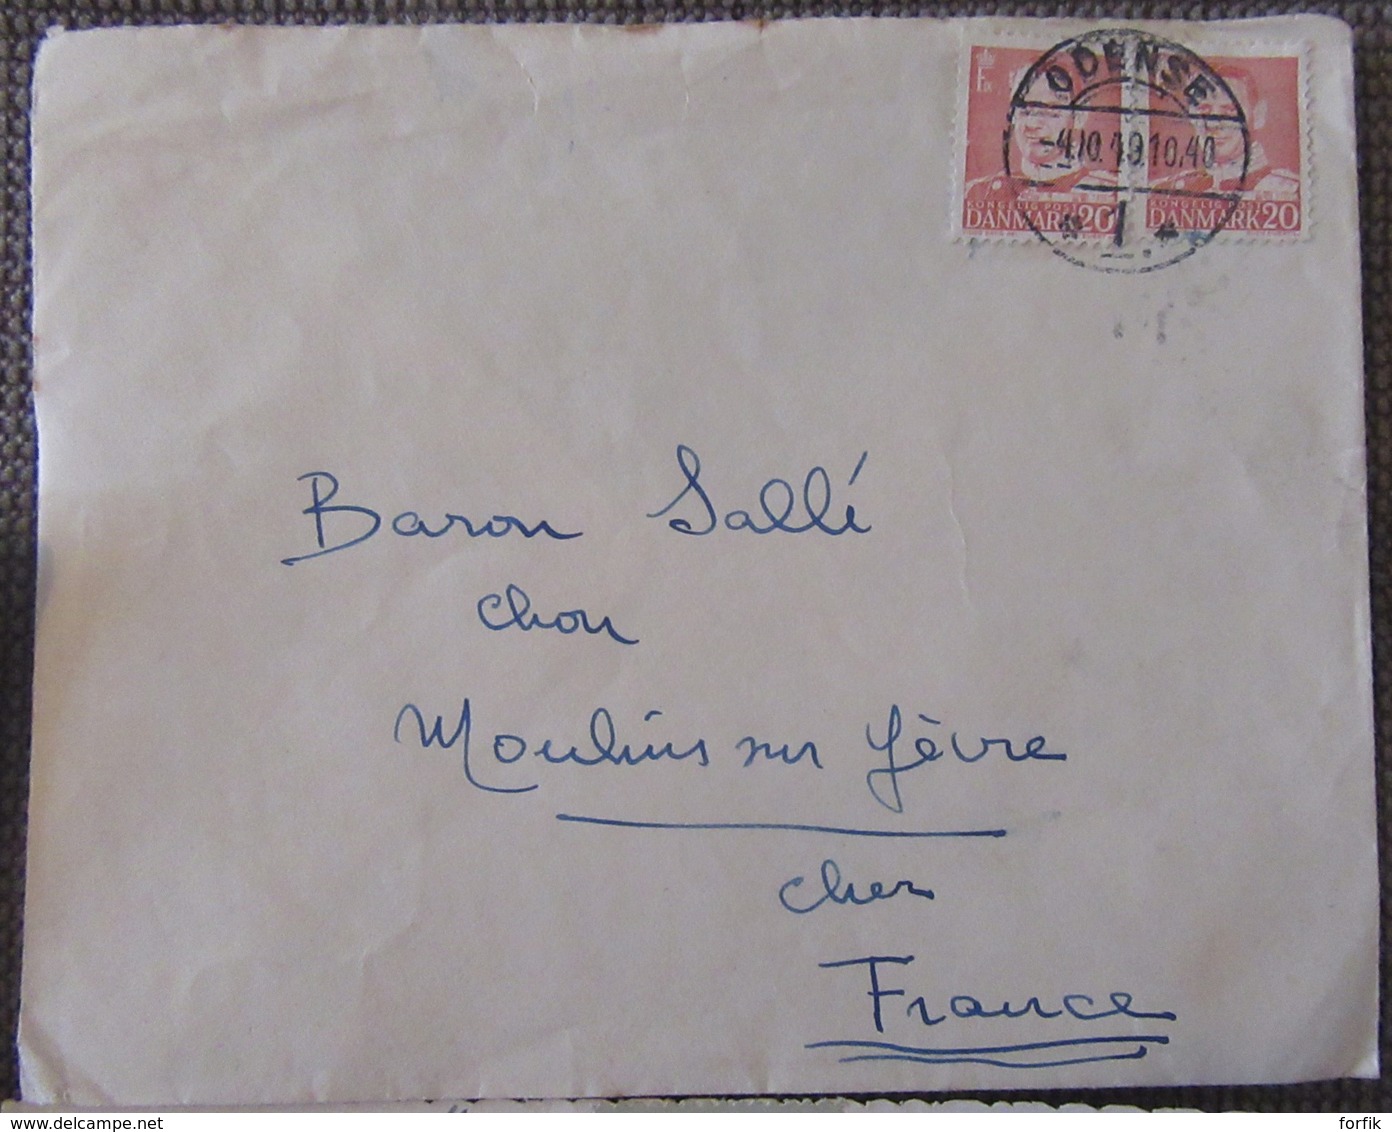 Danemark vers France - 4 Enveloppes + 1 Carte postale avec timbres YT n°37, 288, 315, 317, 335 (UPU), 1902 à 1950